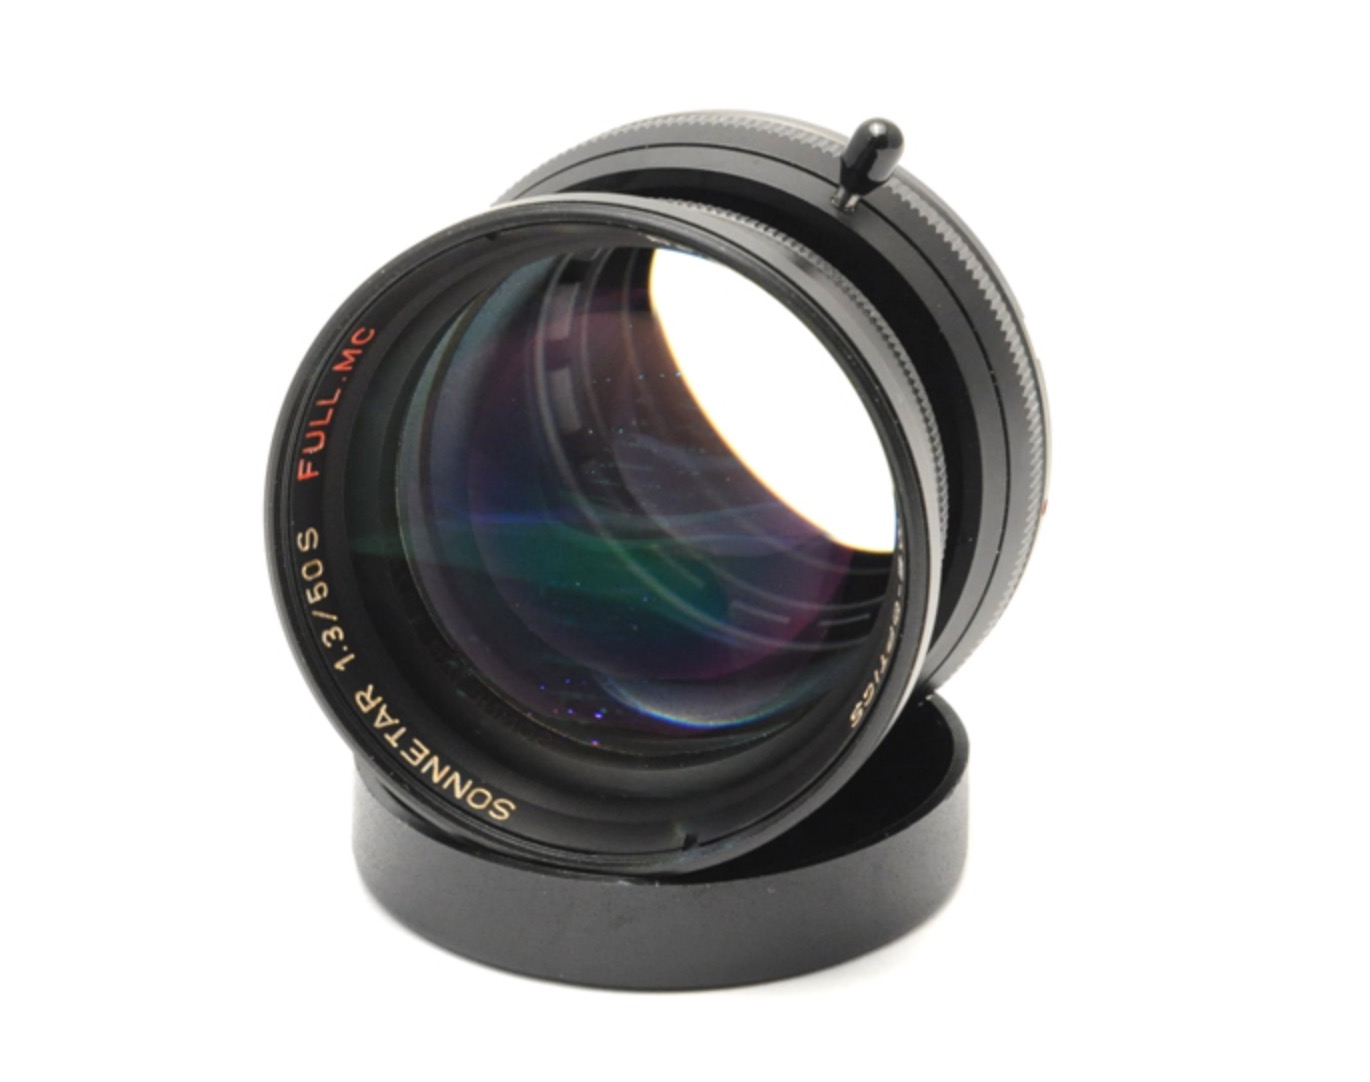 MS Optics, Leica M-Mount için 955 $ Sonnetar 50mm F1.3 lens! Fotoğraf Haber